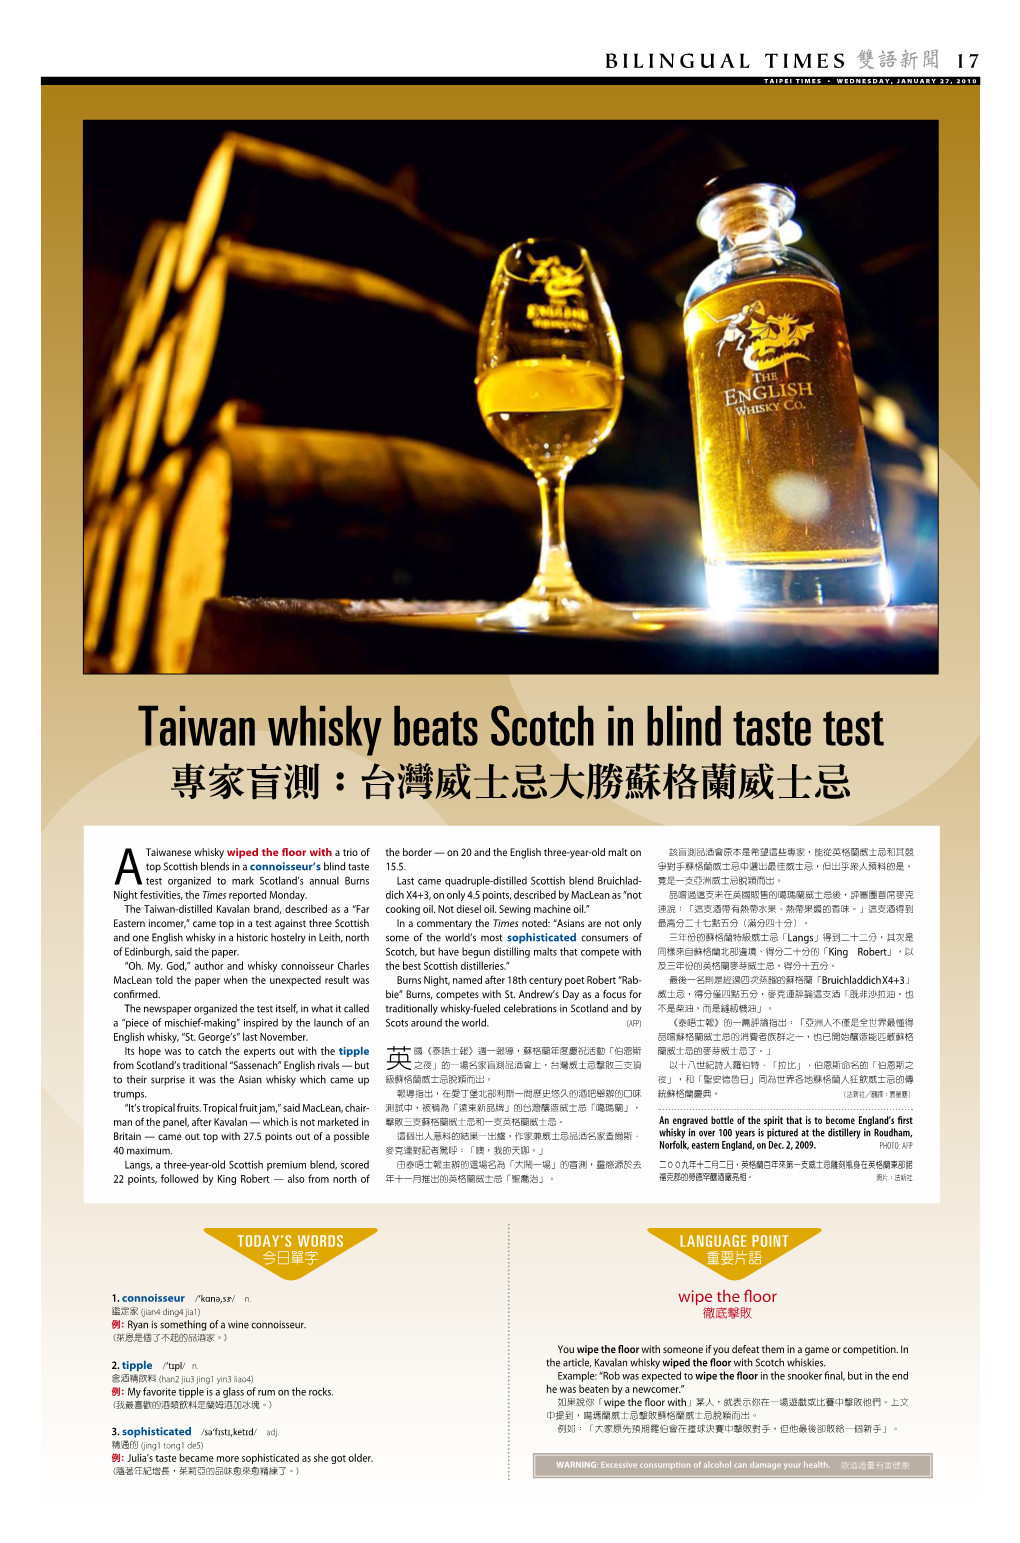 Taiwan Whisky Beats Scotch in Blind Taste Test 專家盲測：台灣威士忌大勝蘇格蘭威士忌